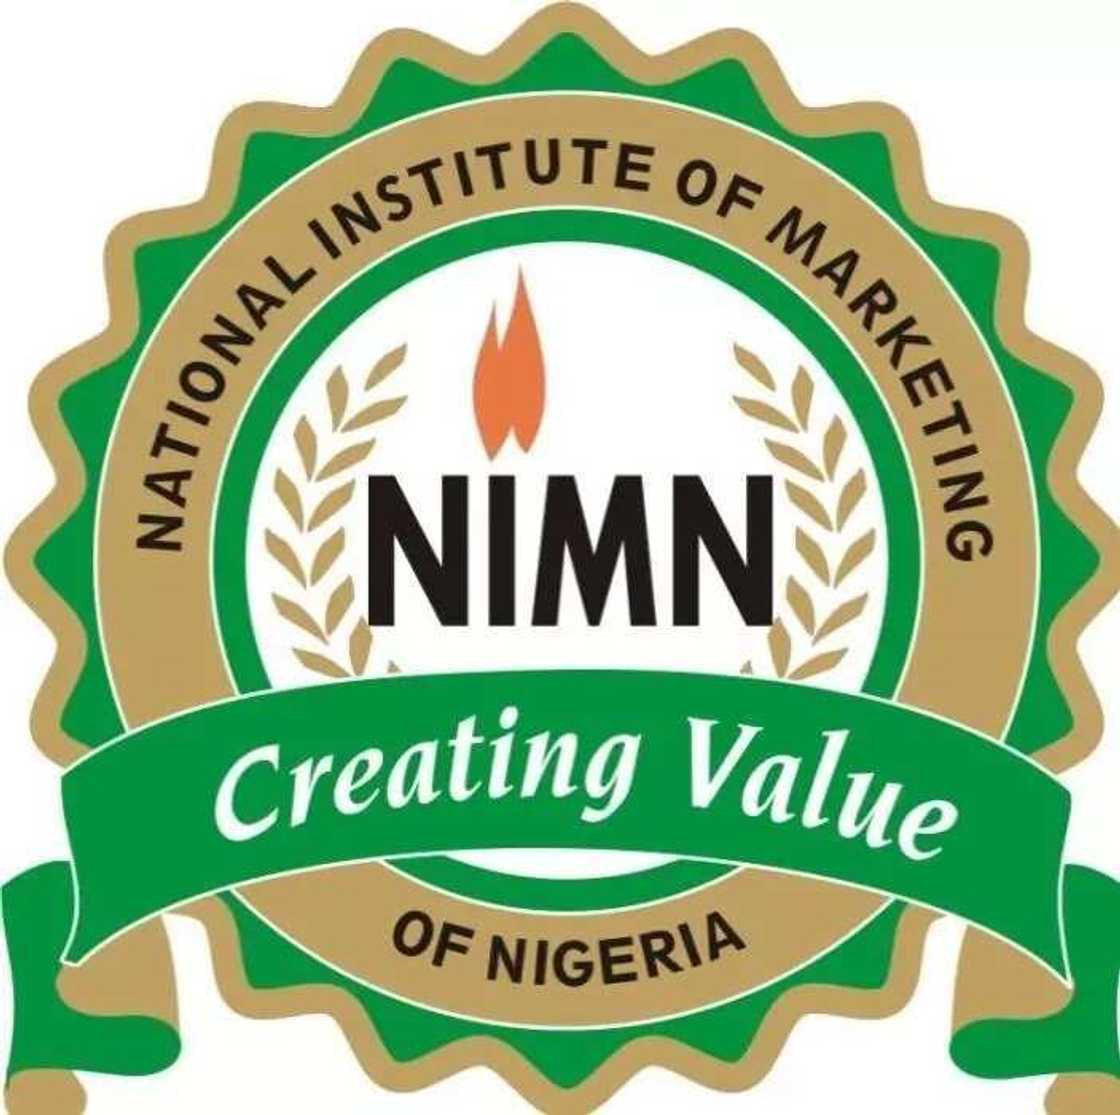 National Institute of Marketing of Nigeria